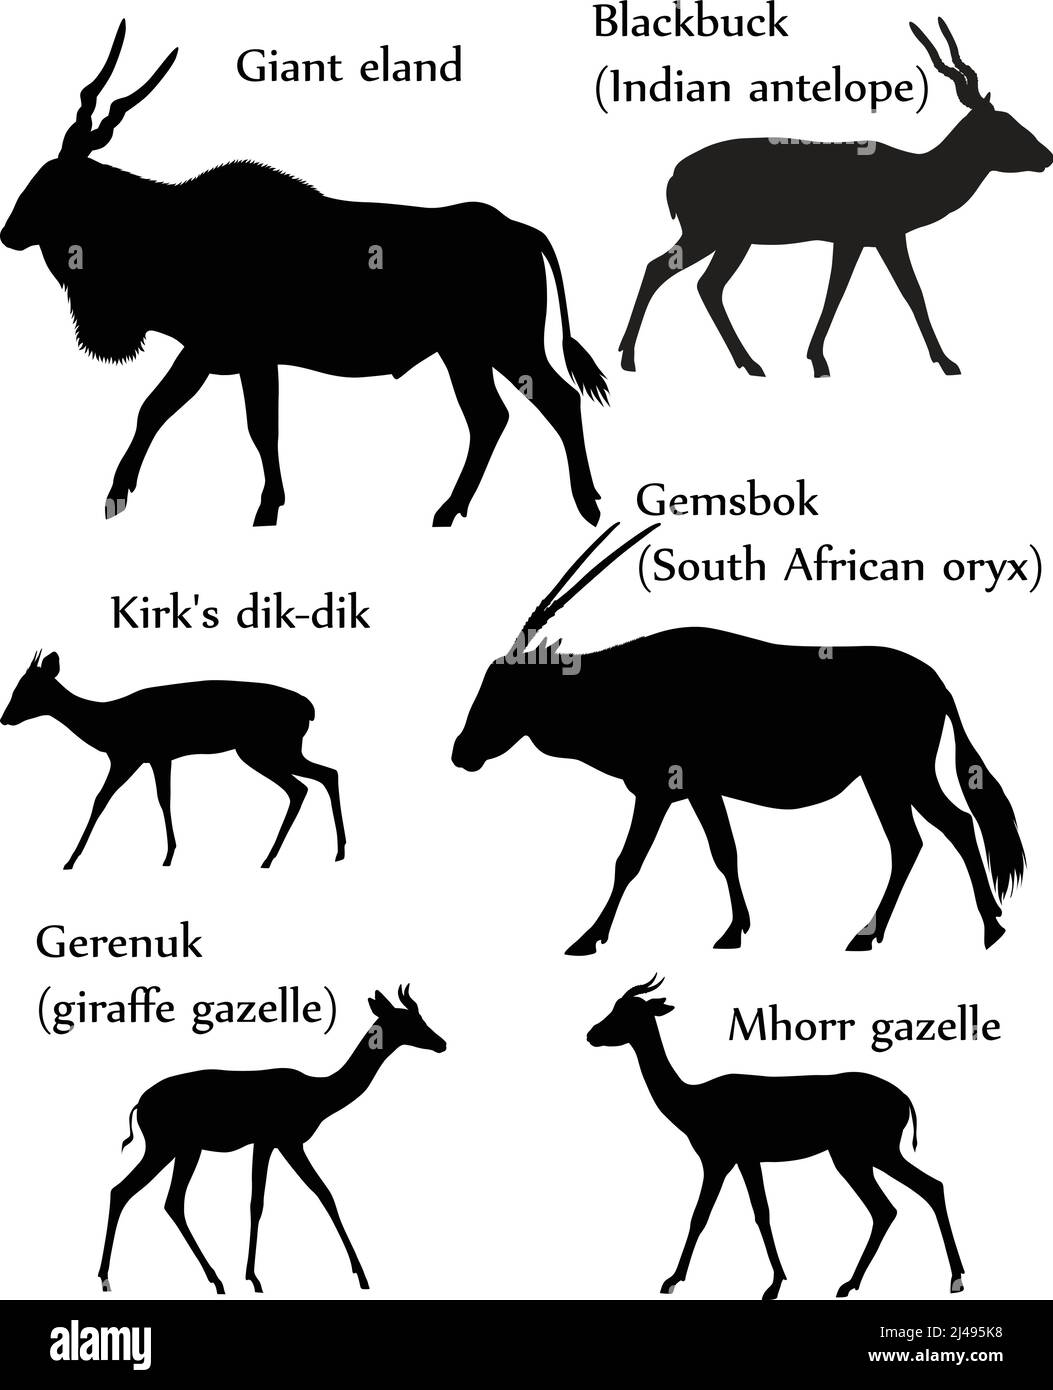 Collezione di diverse specie di antilopi in silhouette: Terra gigante, nero, gemsbok, dik-dik di kirk, gerenuk, gazzella del mhorr Illustrazione Vettoriale